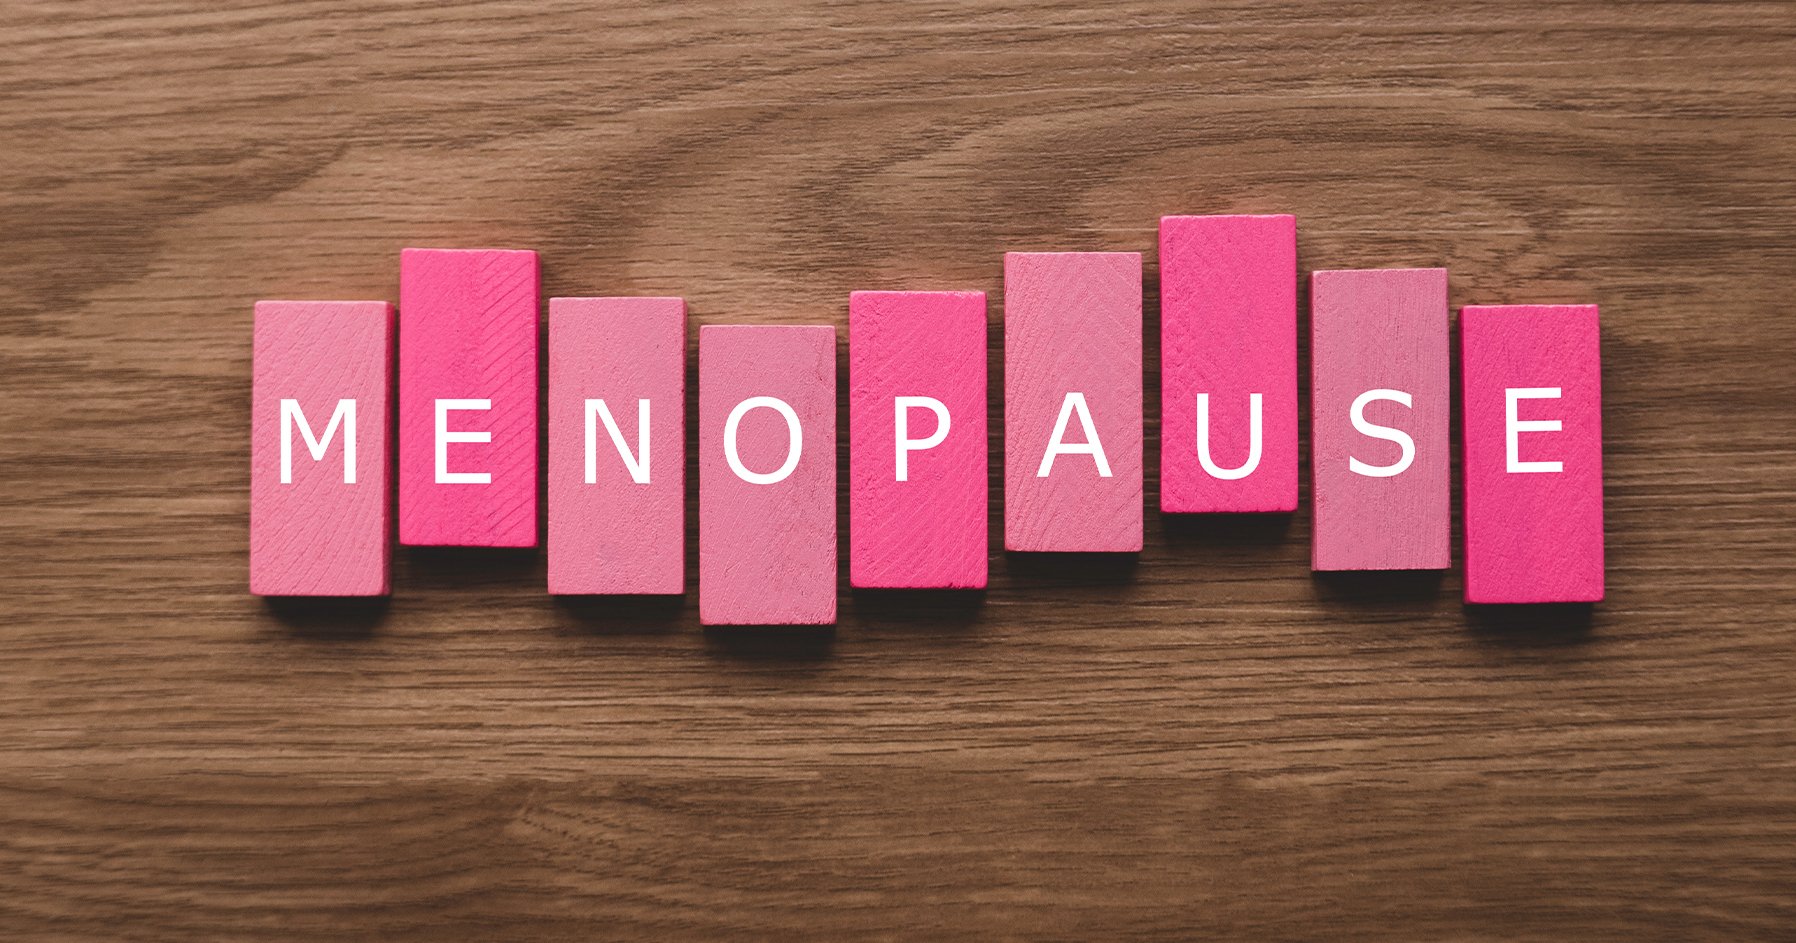 Menopause PE 1796x943 1